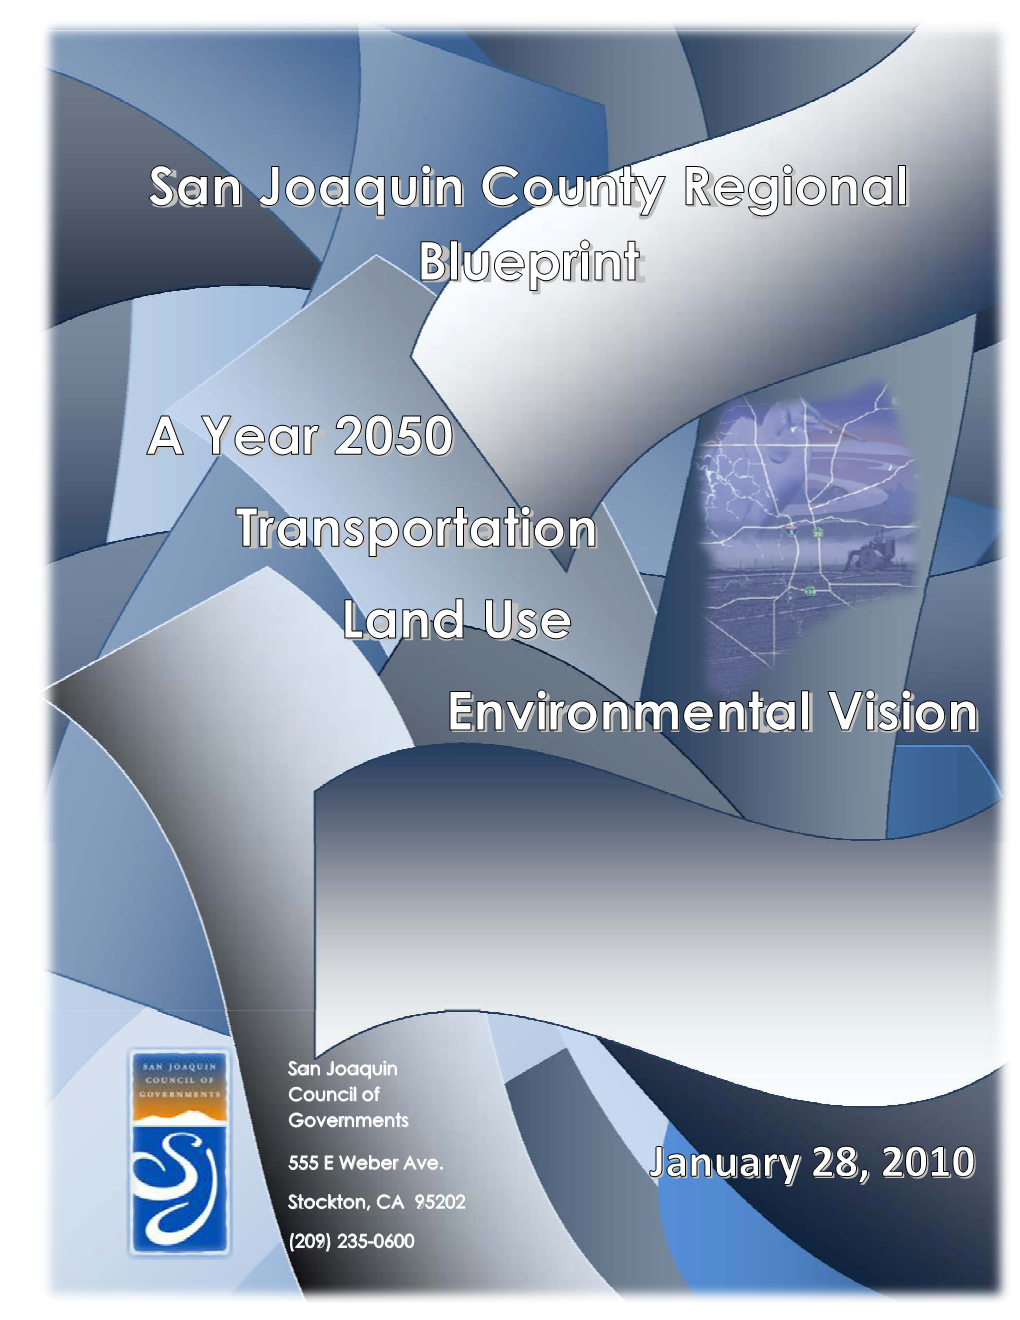 San Joaquin County Regional Blueprint a Year 2050